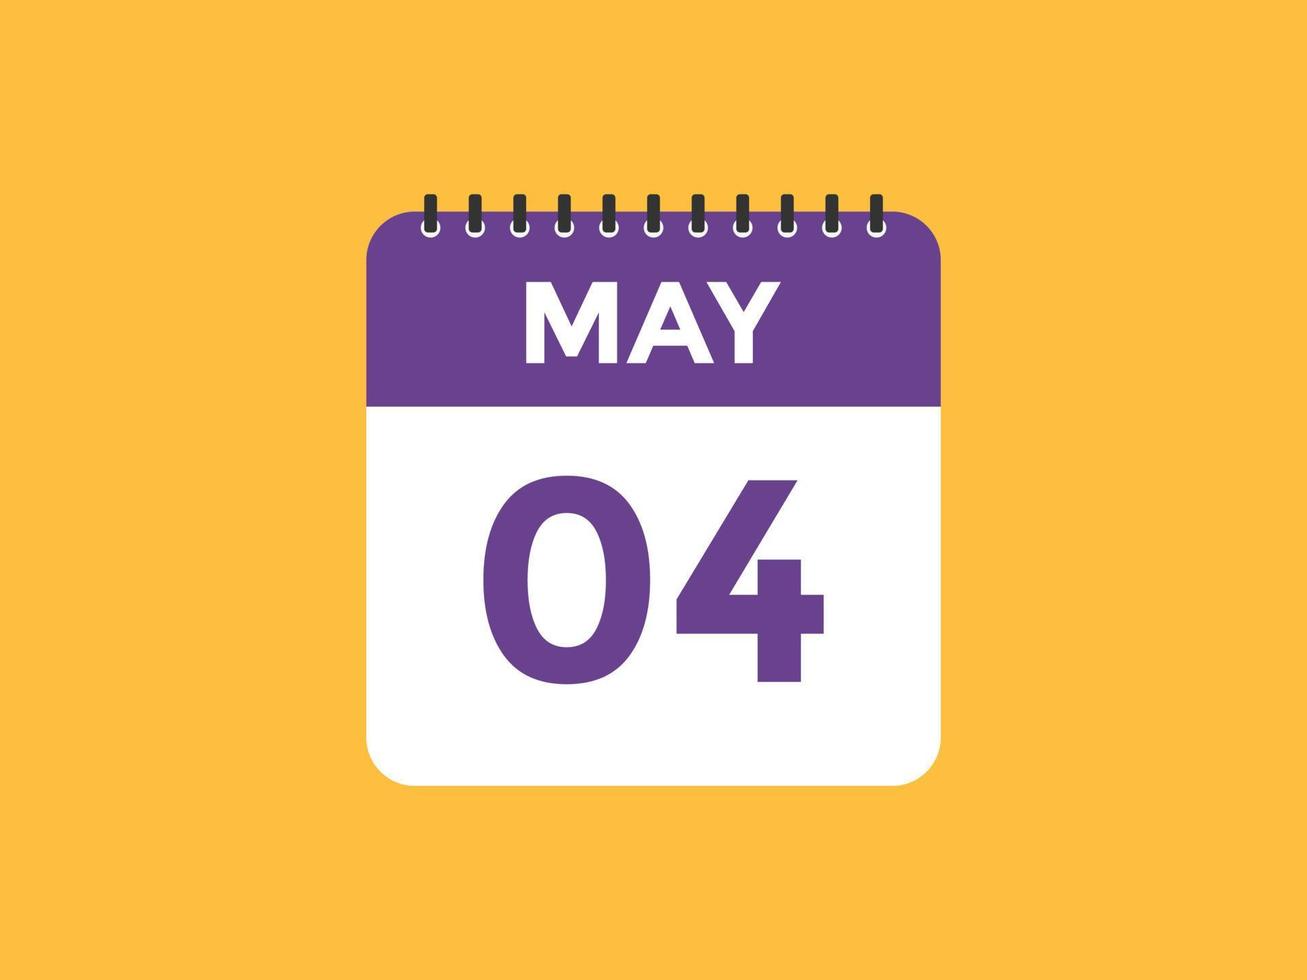 4. Mai Kalendererinnerung. 4. mai tägliche kalendersymbolvorlage. Kalender 4. Mai Icon-Design-Vorlage. Vektor-Illustration vektor